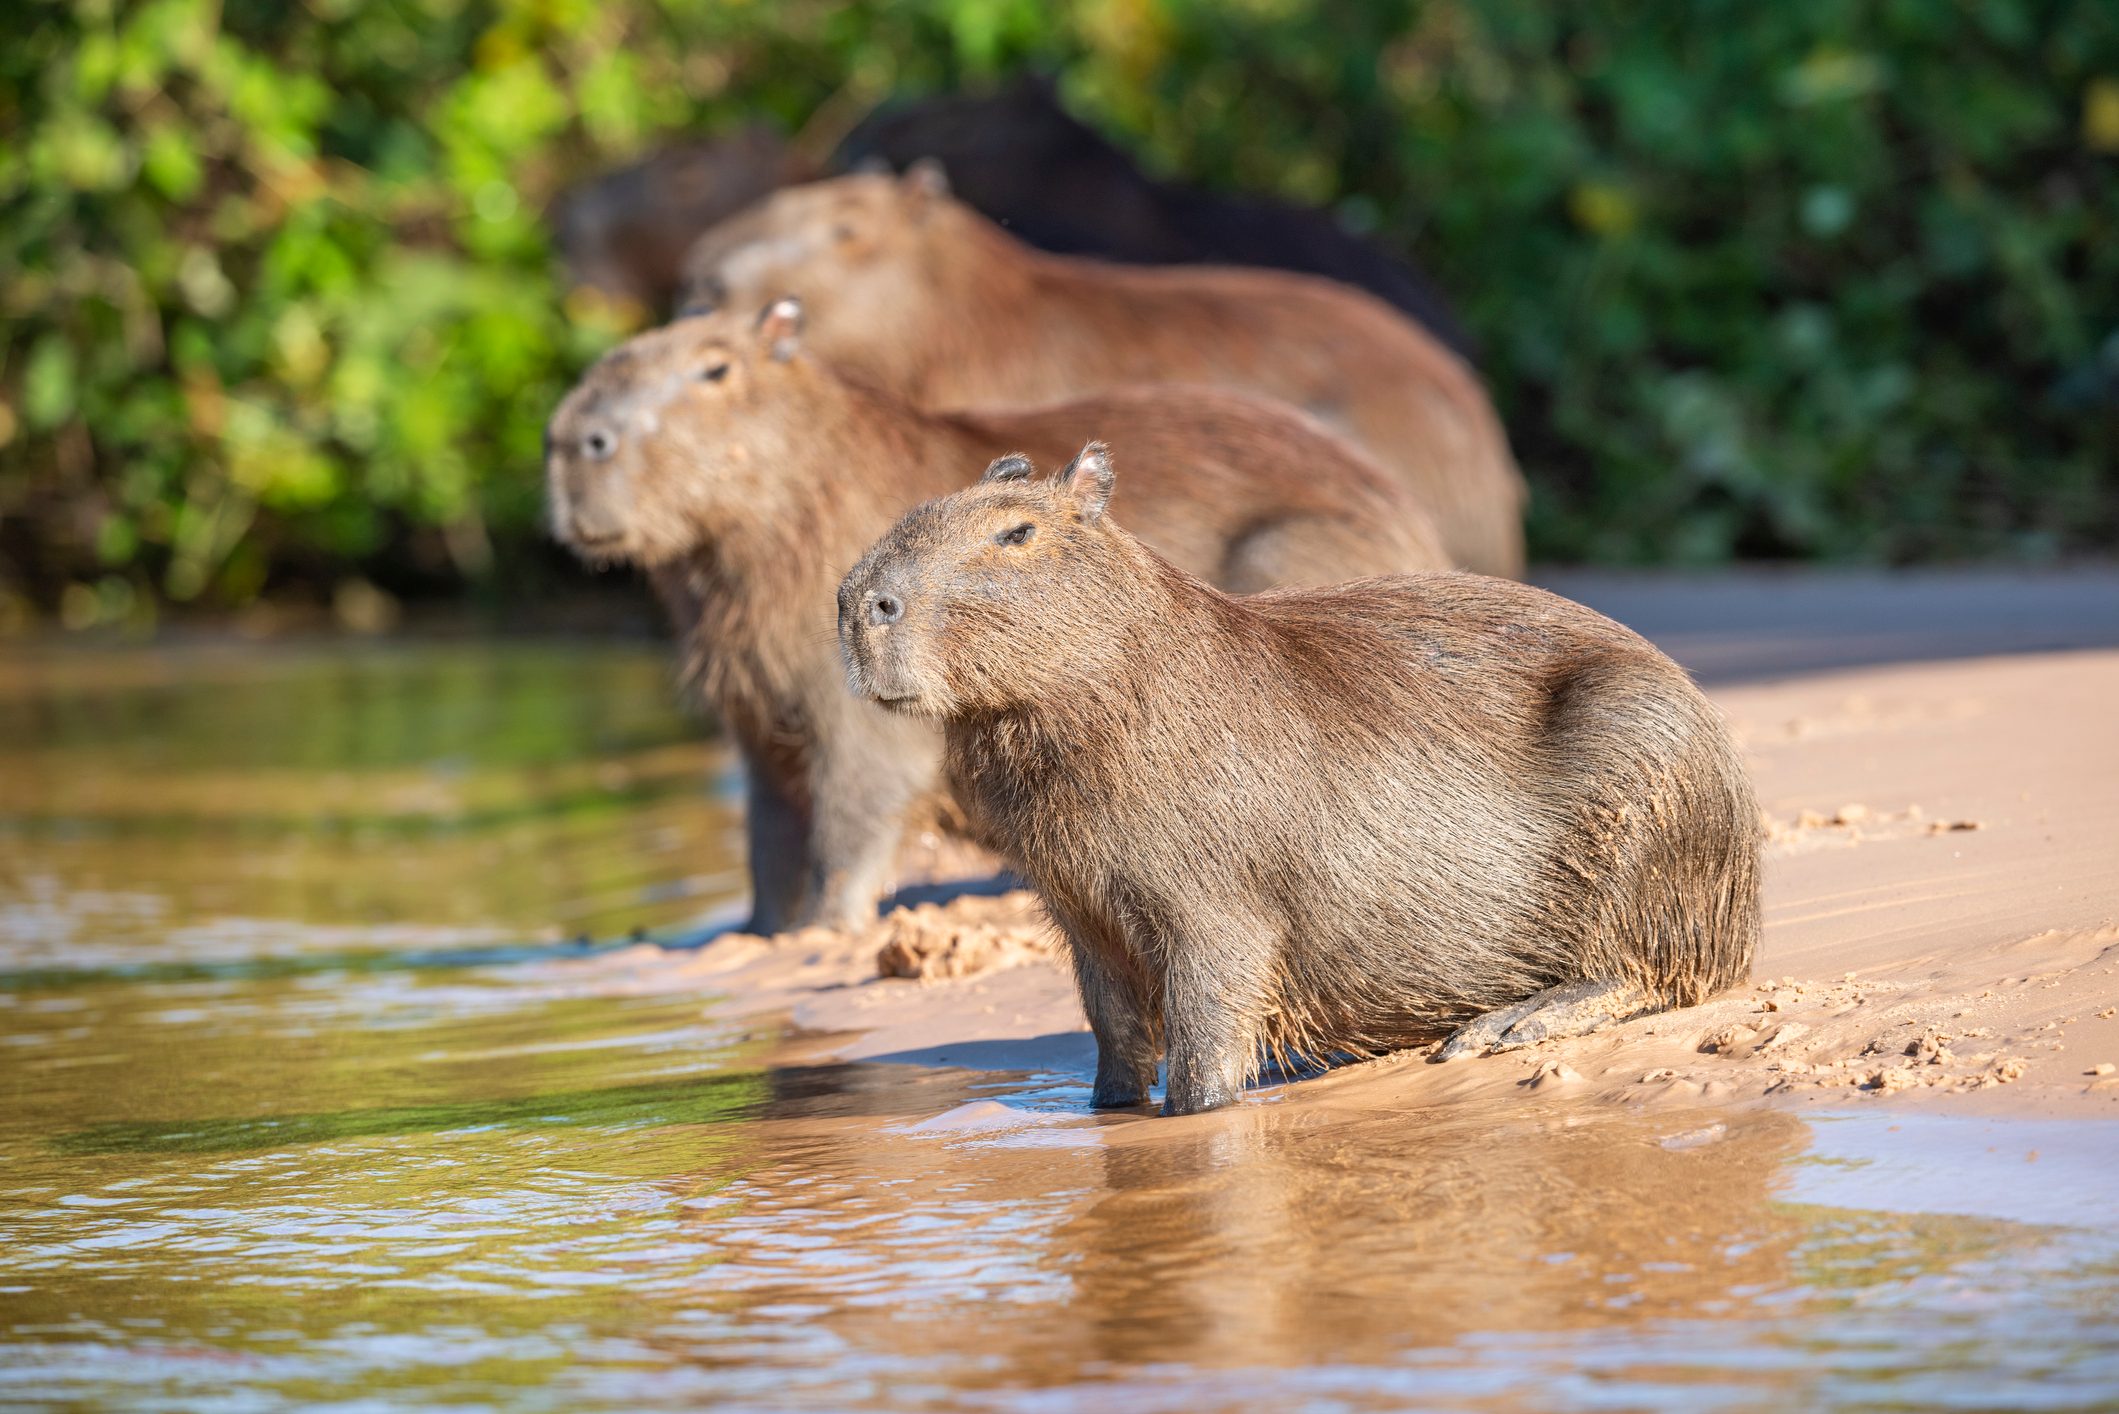 Capybara (Hydrochoerus hydrochaeris), Pantanal wetlands, Brazil